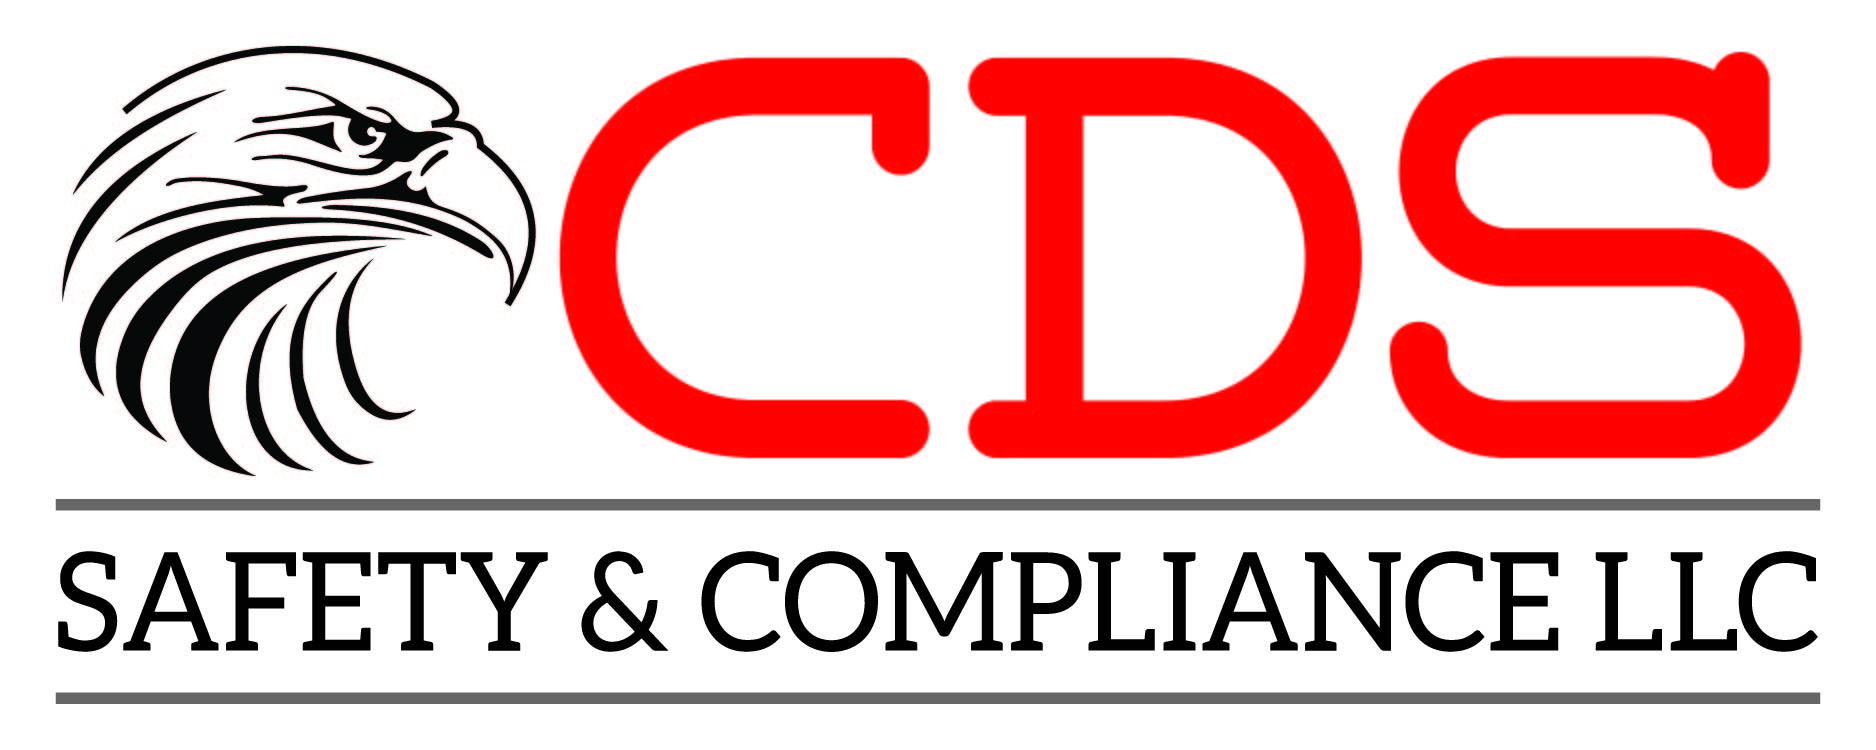 cds safety & compliance llc logo